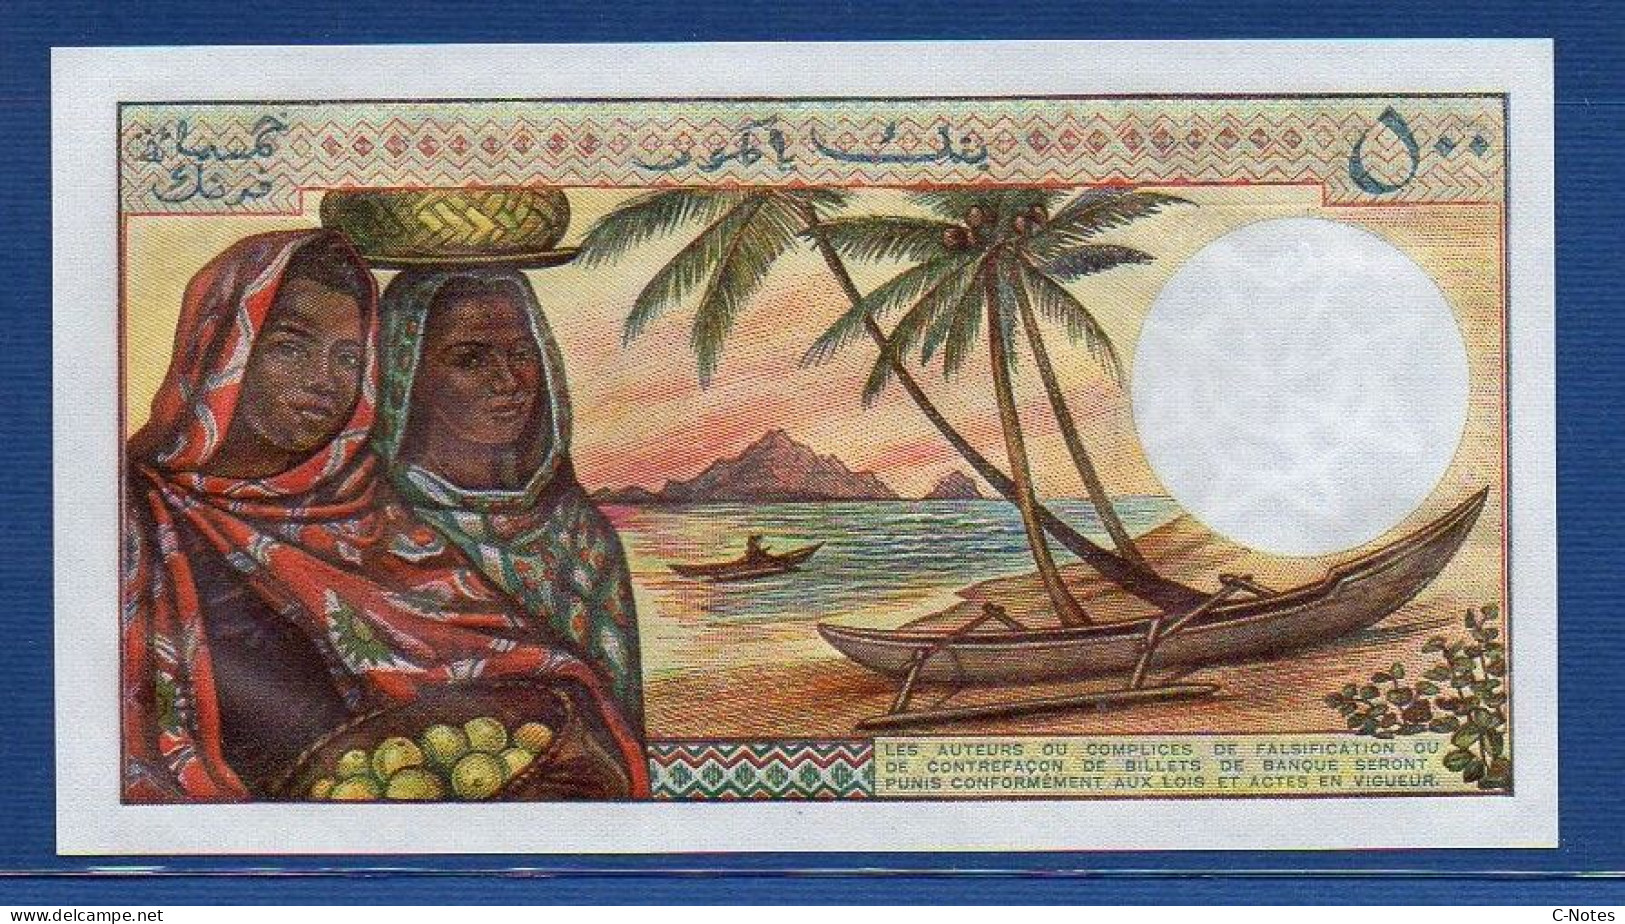 COMOROS - P. 7a2 – 500 Francs ND (1976) UNC, S/n Z.1 00875 - Comoren